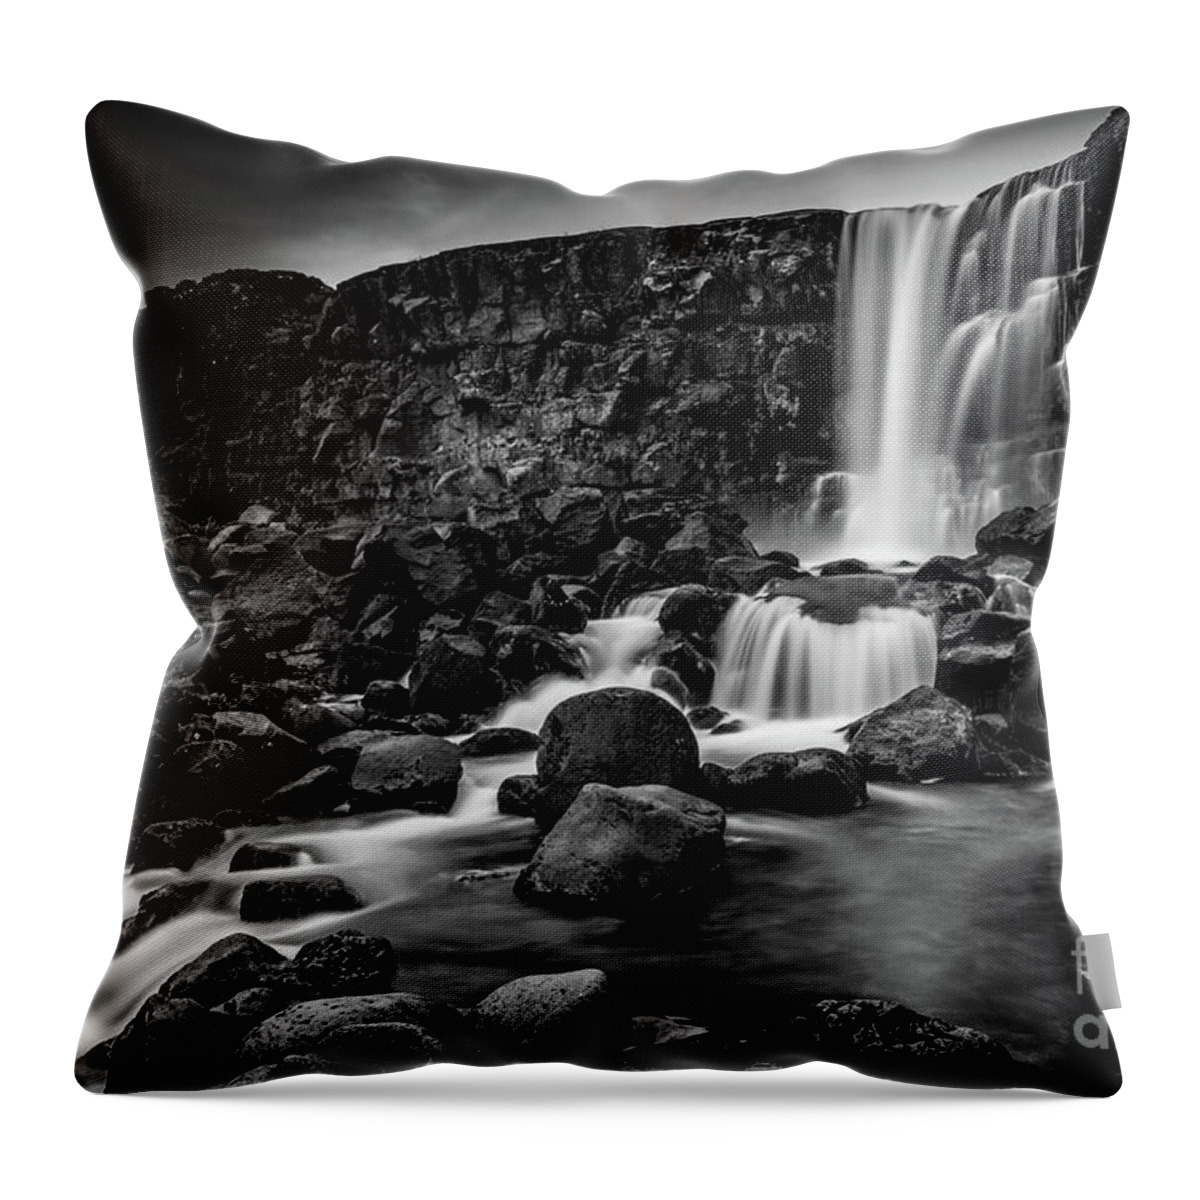 Iceland Throw Pillow featuring the photograph Icelandic falls by Izet Kapetanovic